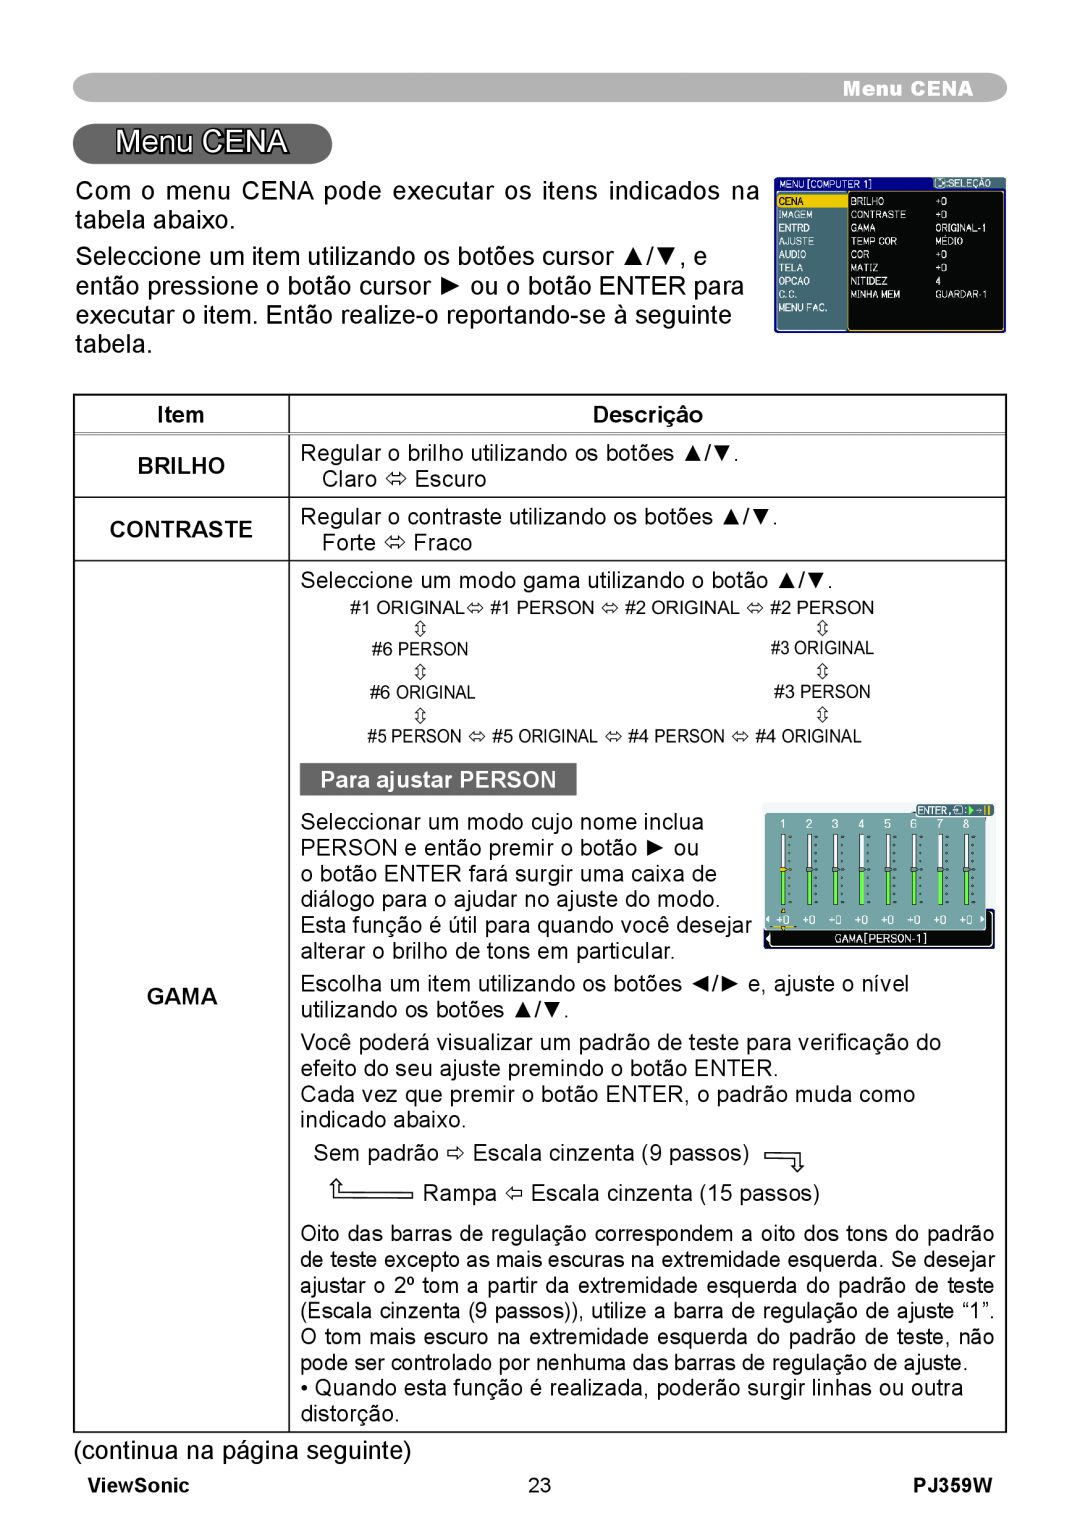 ViewSonic PJ359 manual Menu CENA, Descriçâo, Brilho, Contraste, Para ajustar PERSON, Gama 